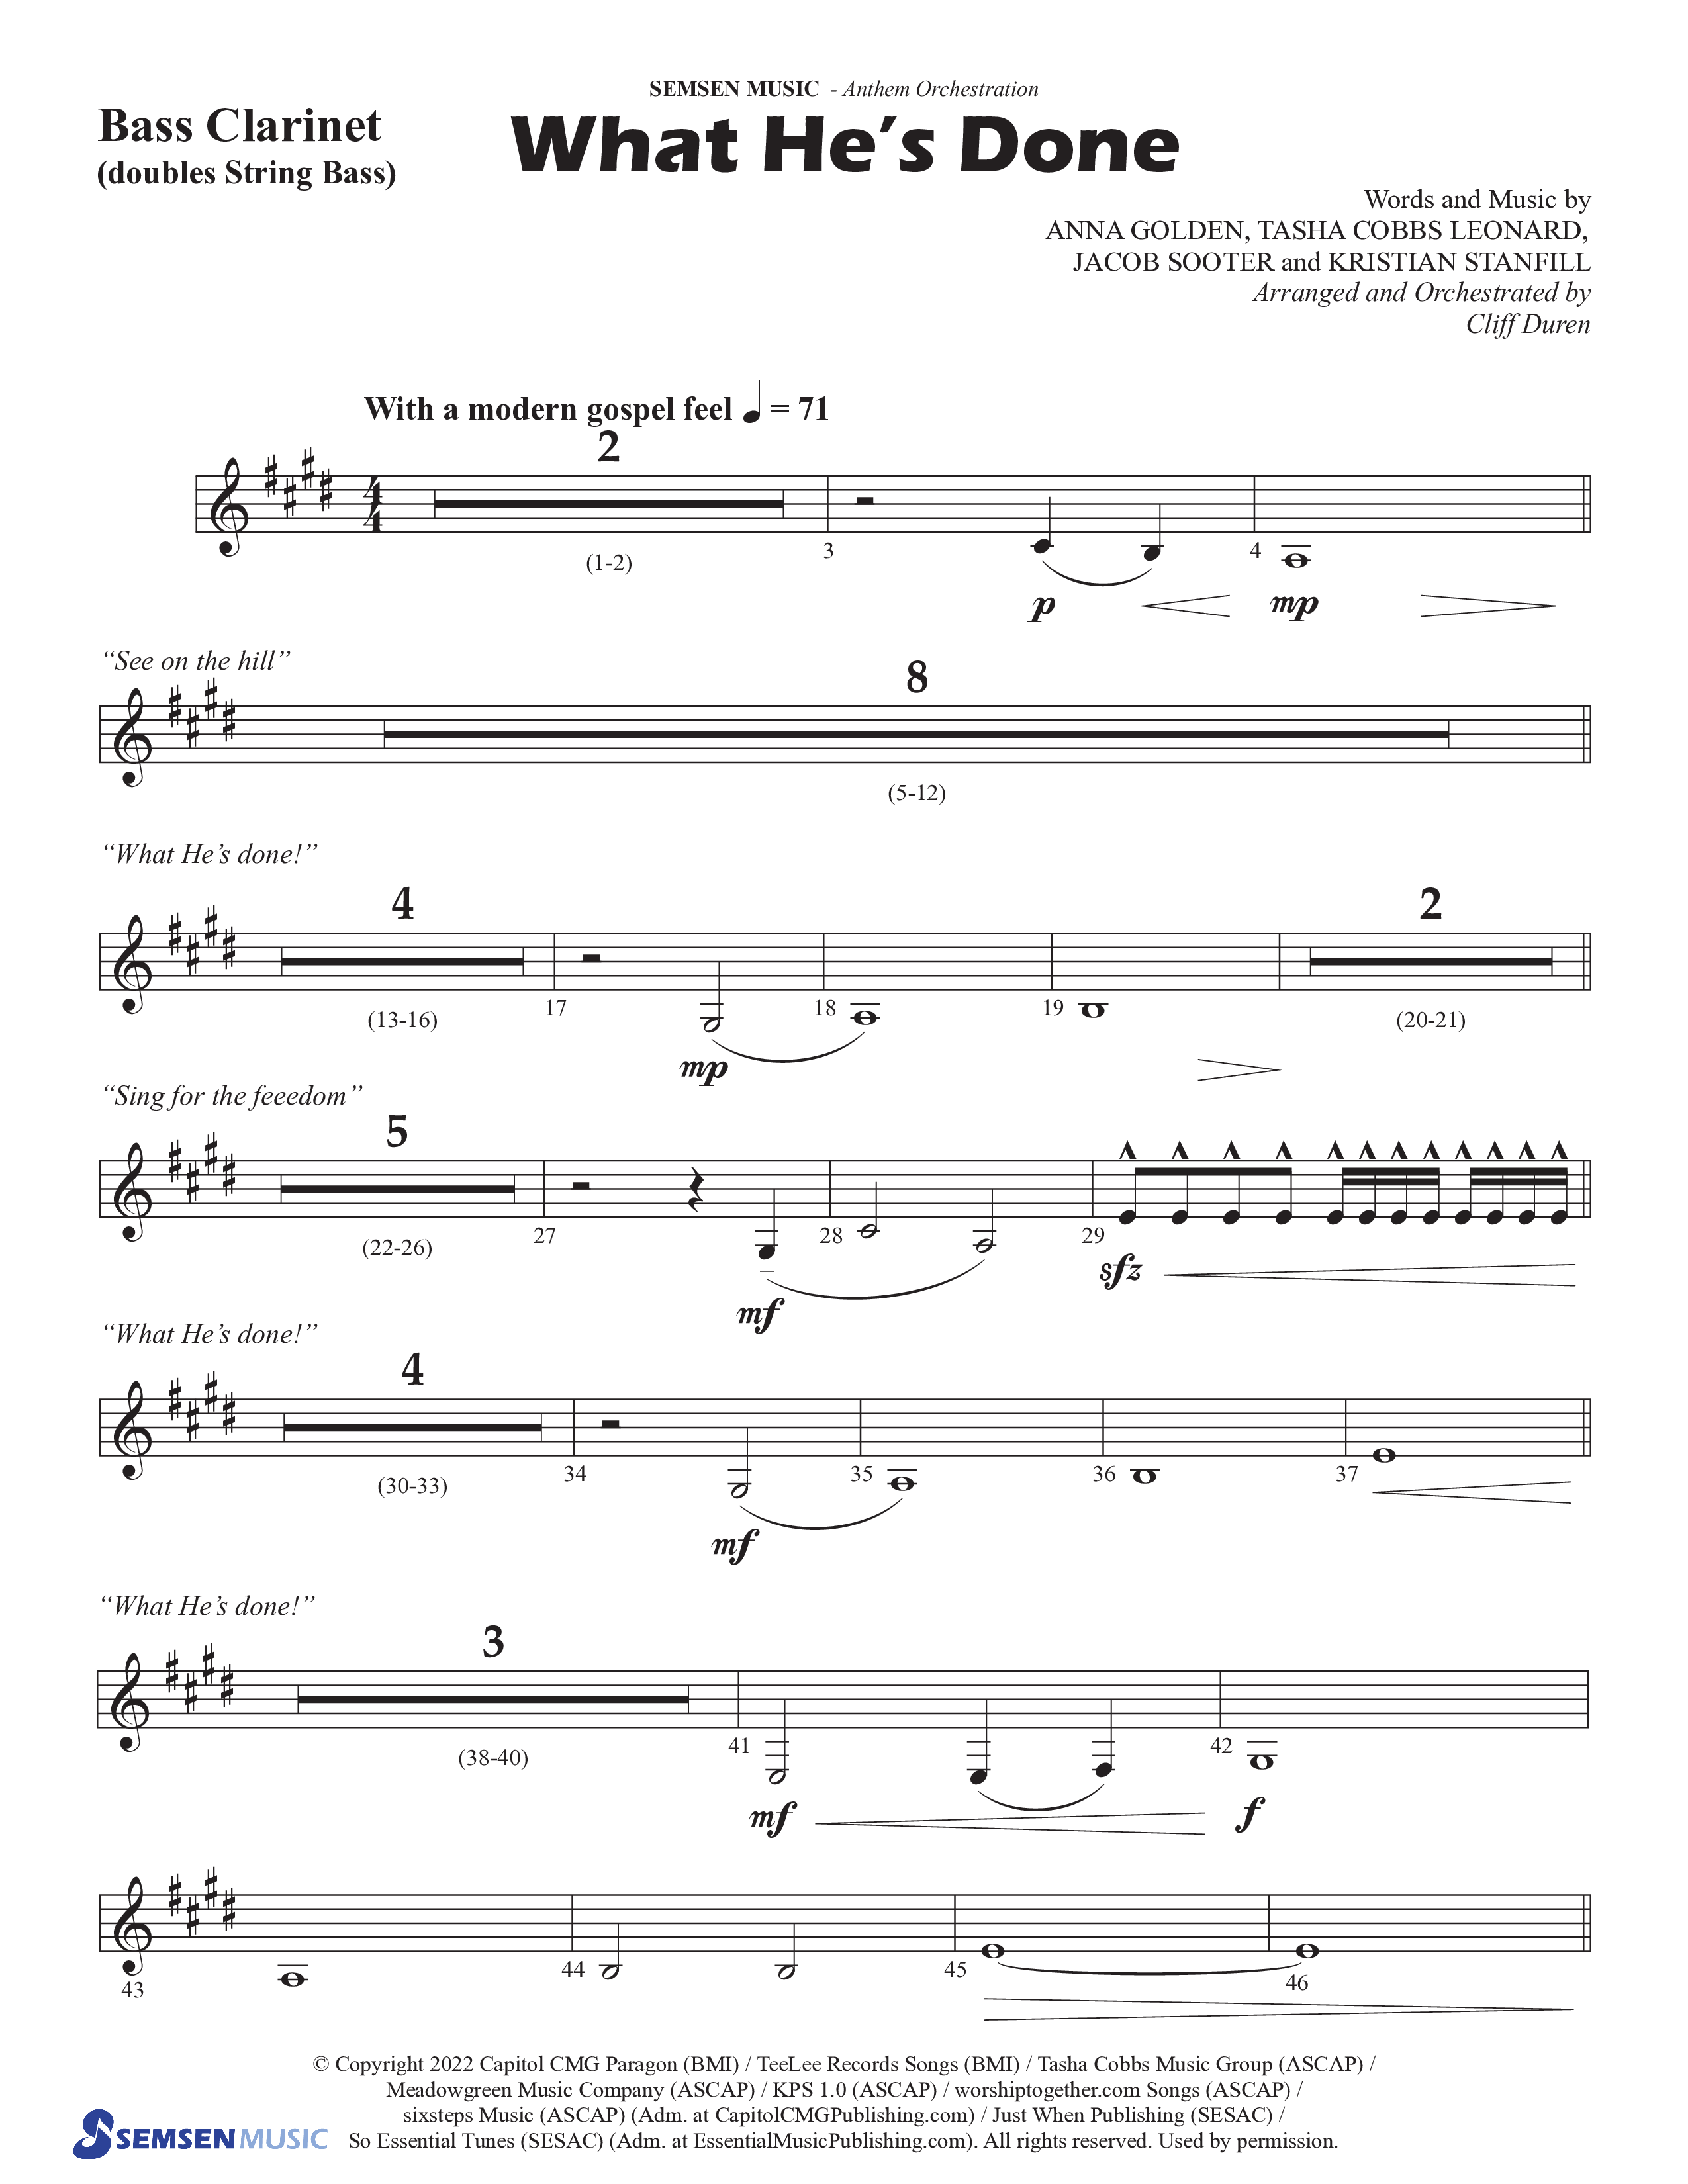 What He's Done (Choral Anthem SATB) Bass Clarinet (Semsen Music / Arr. Cliff Duren)